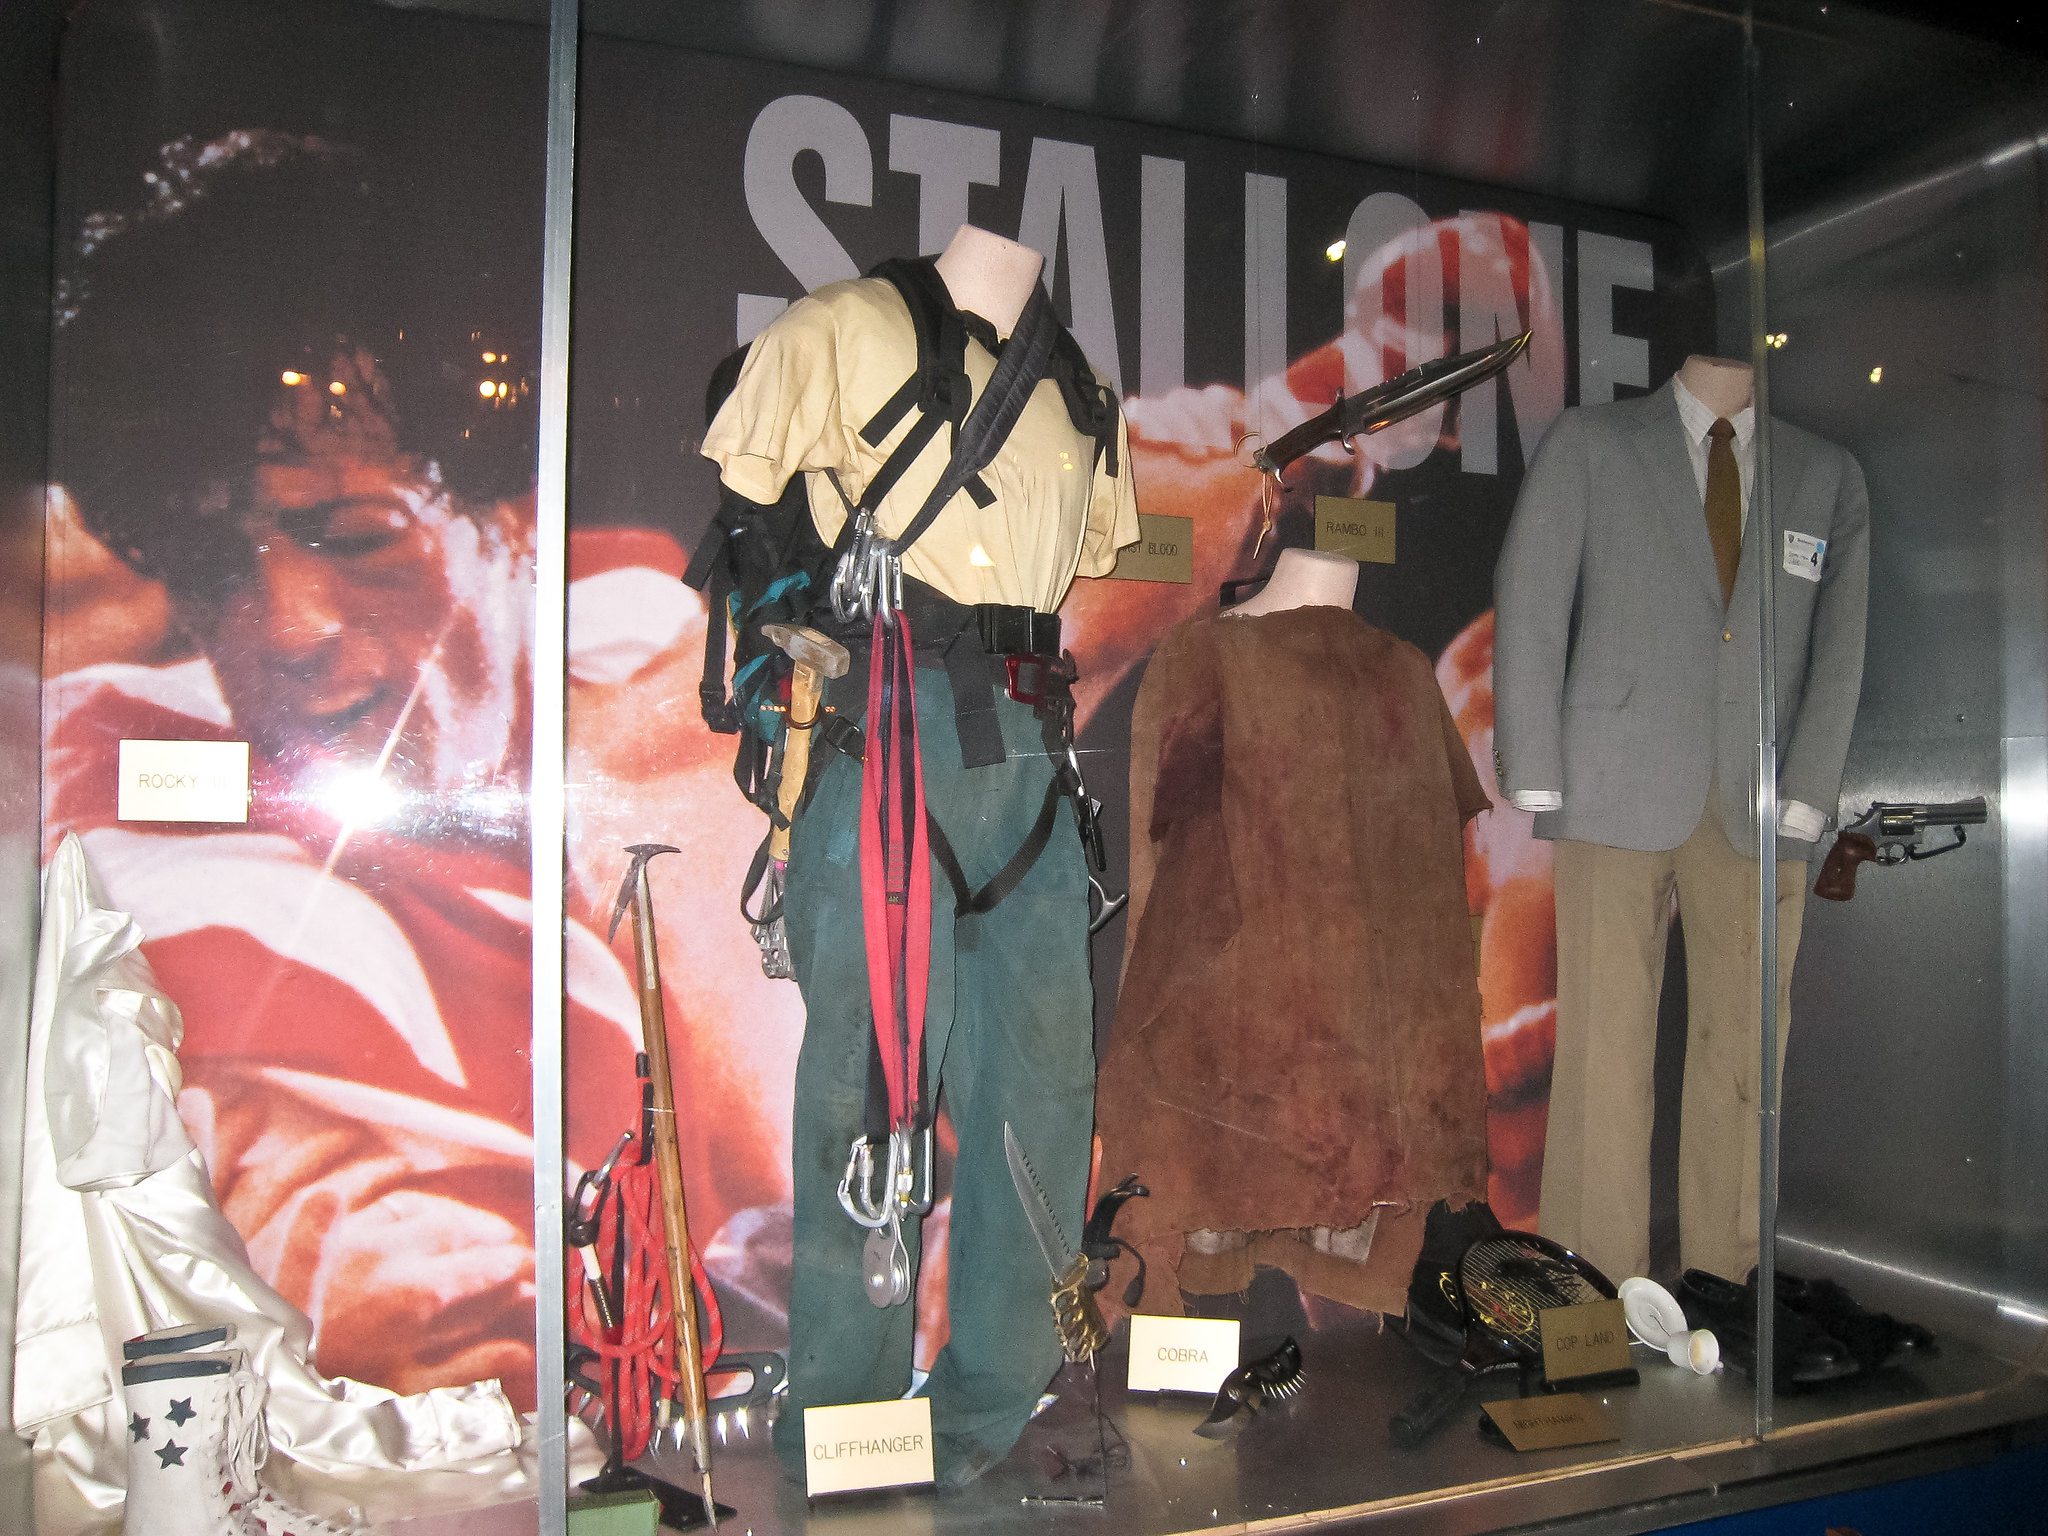 Stallone display at Planet Hollywood